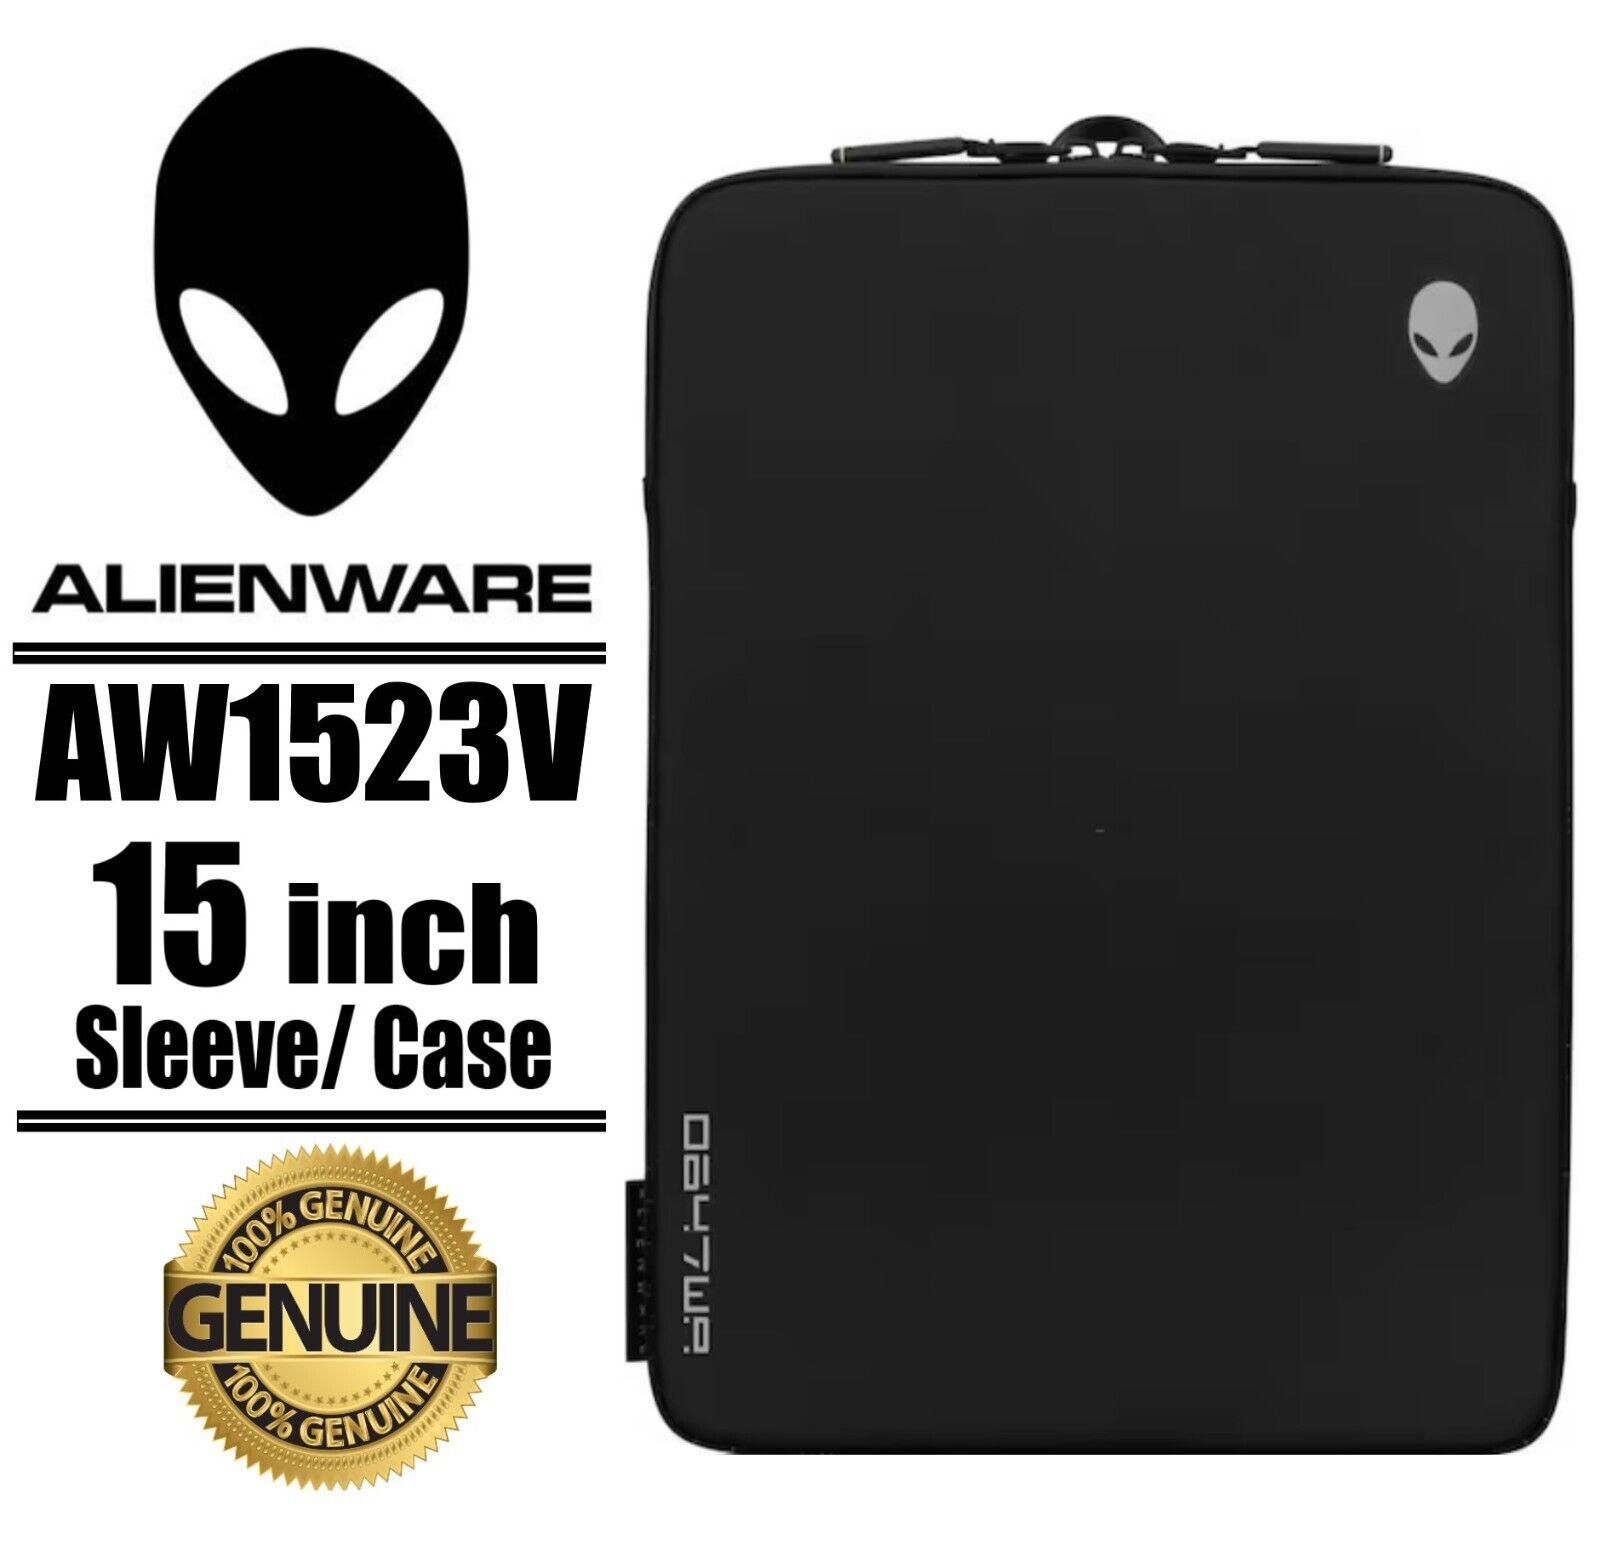 Dell Alienware 17inch Backpack 15 17 18 inch Horizon Laptop Sleeve Case iPad Bag